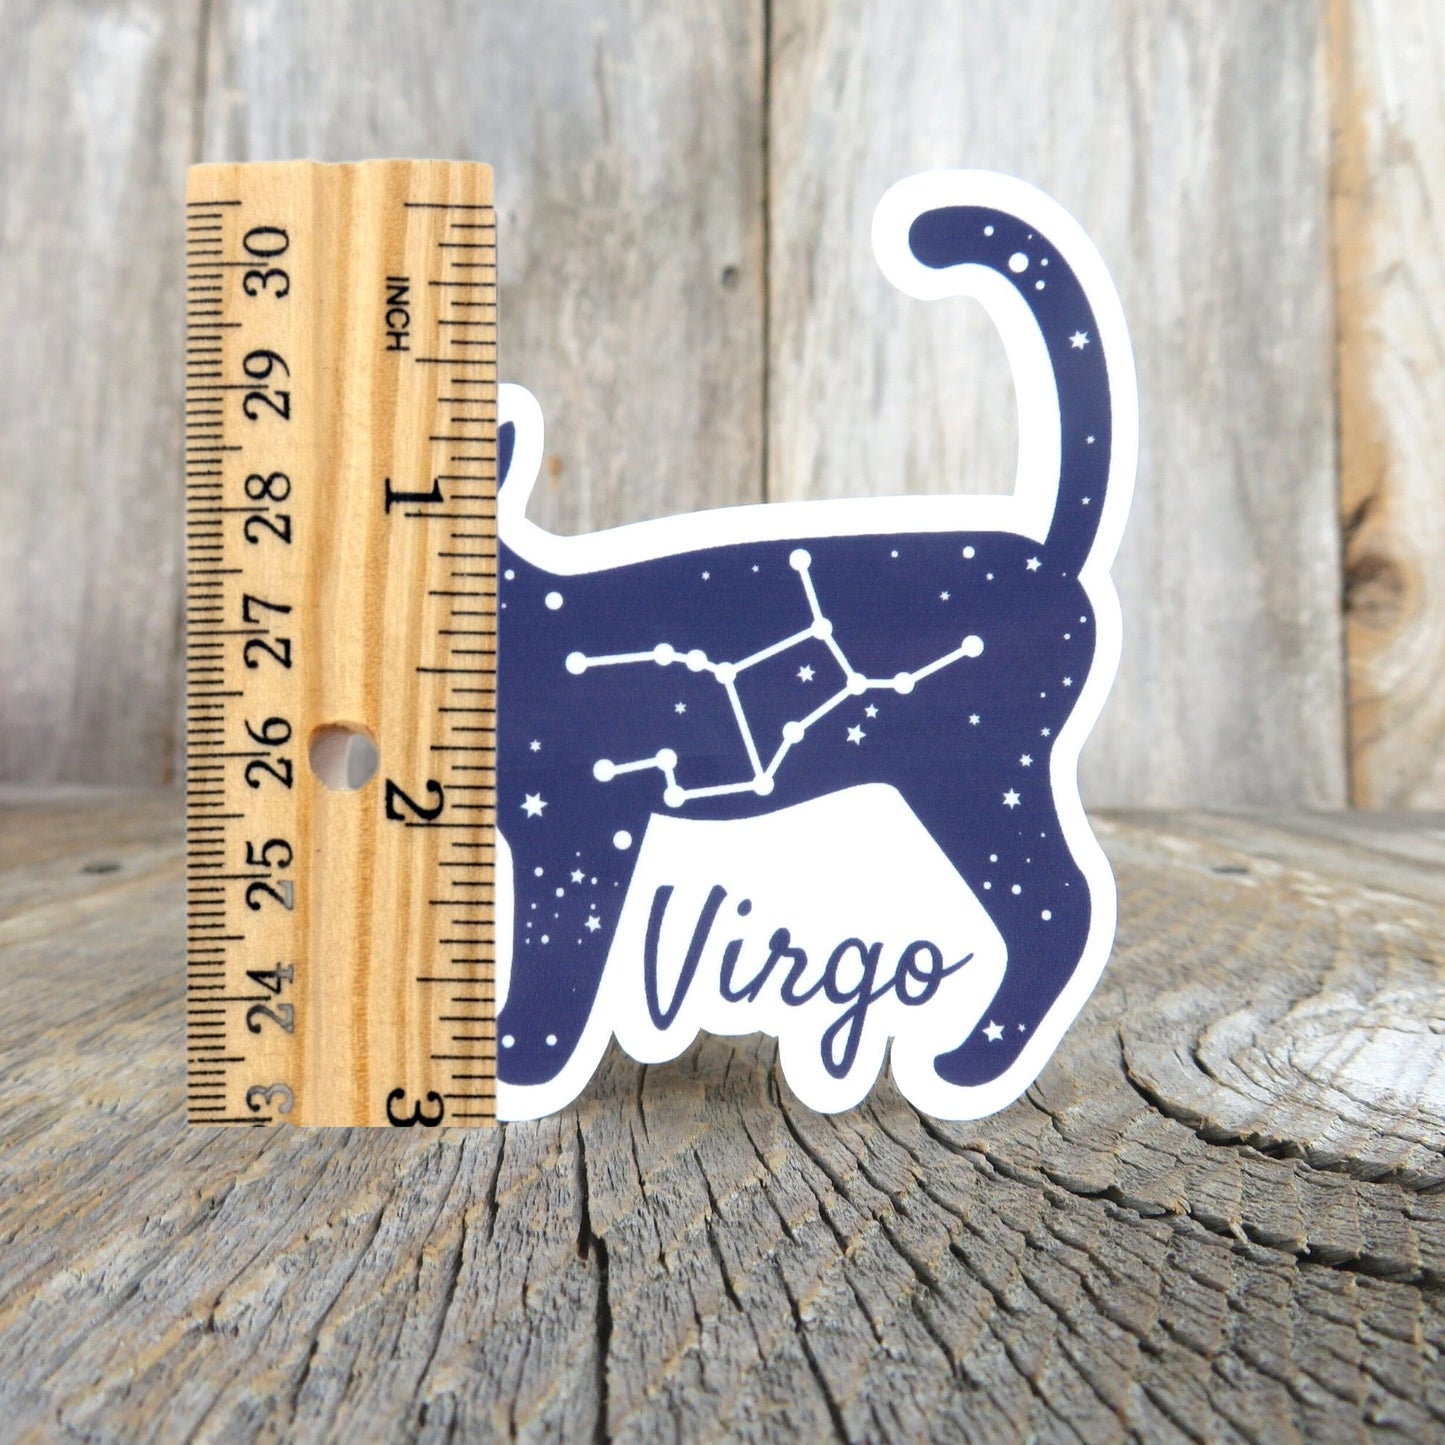 Virgo Cat Sticker Birthday Sign Cat Lover Astrology Star Sign Waterproof Star Chart